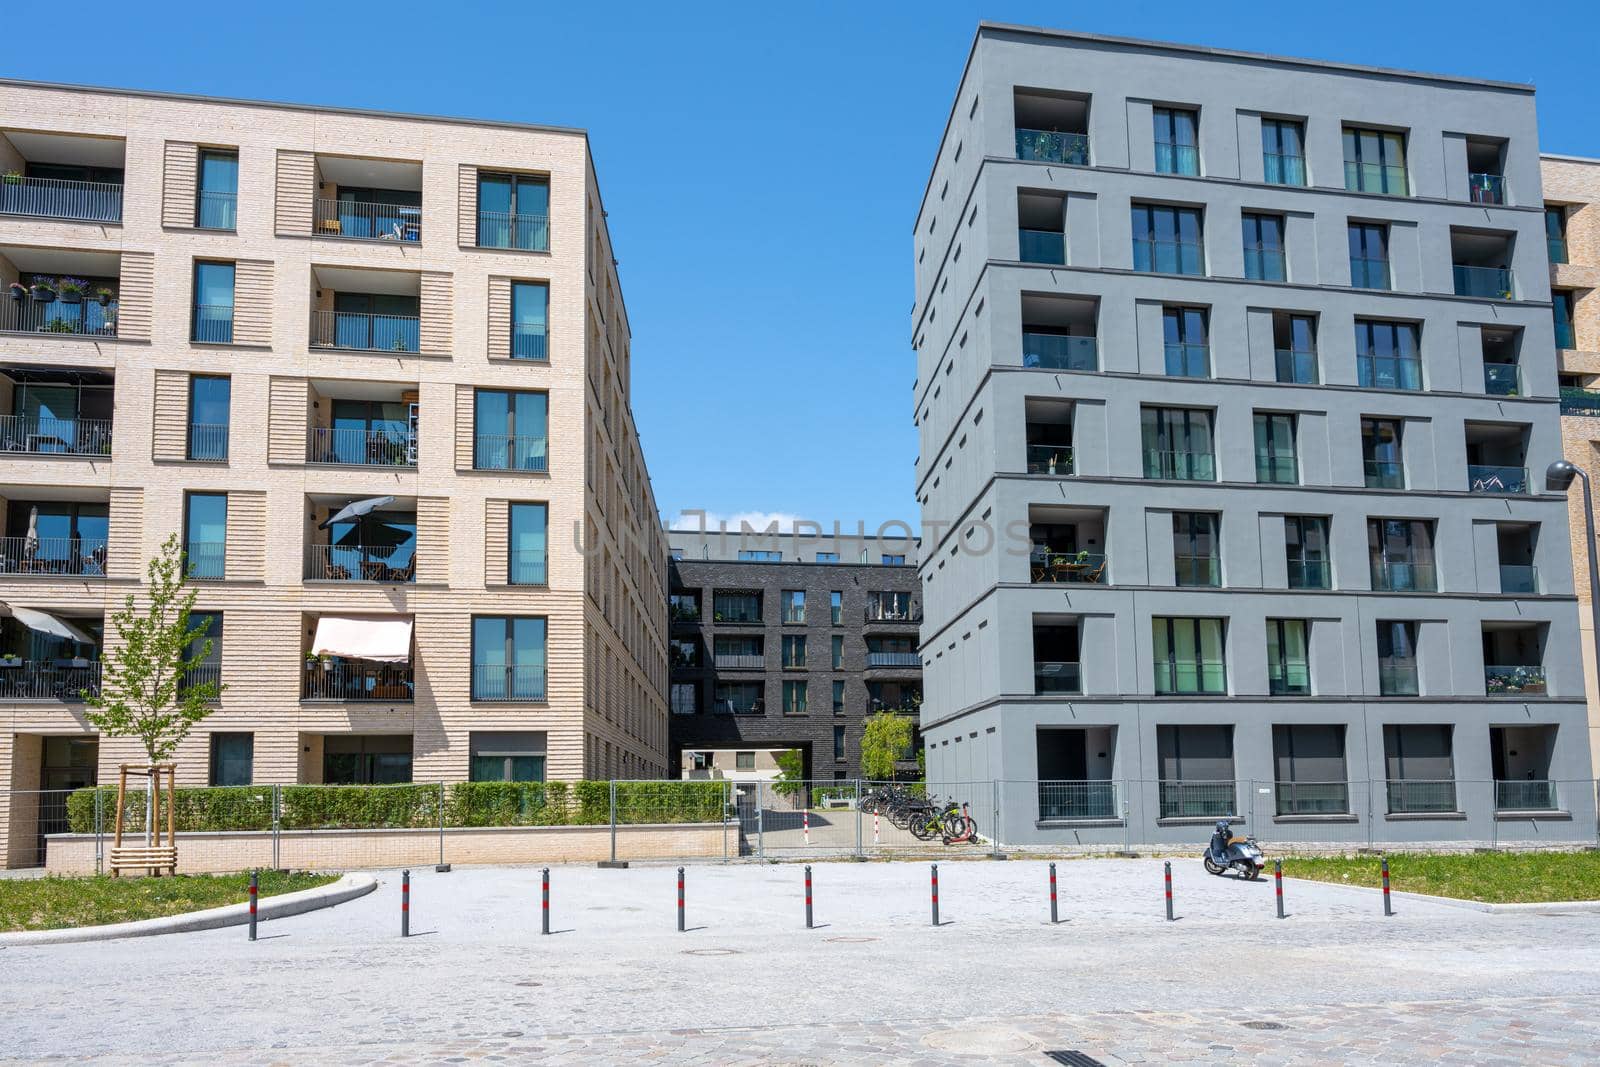 Modern apartment buildings in a housing development area in Berlin, Germany